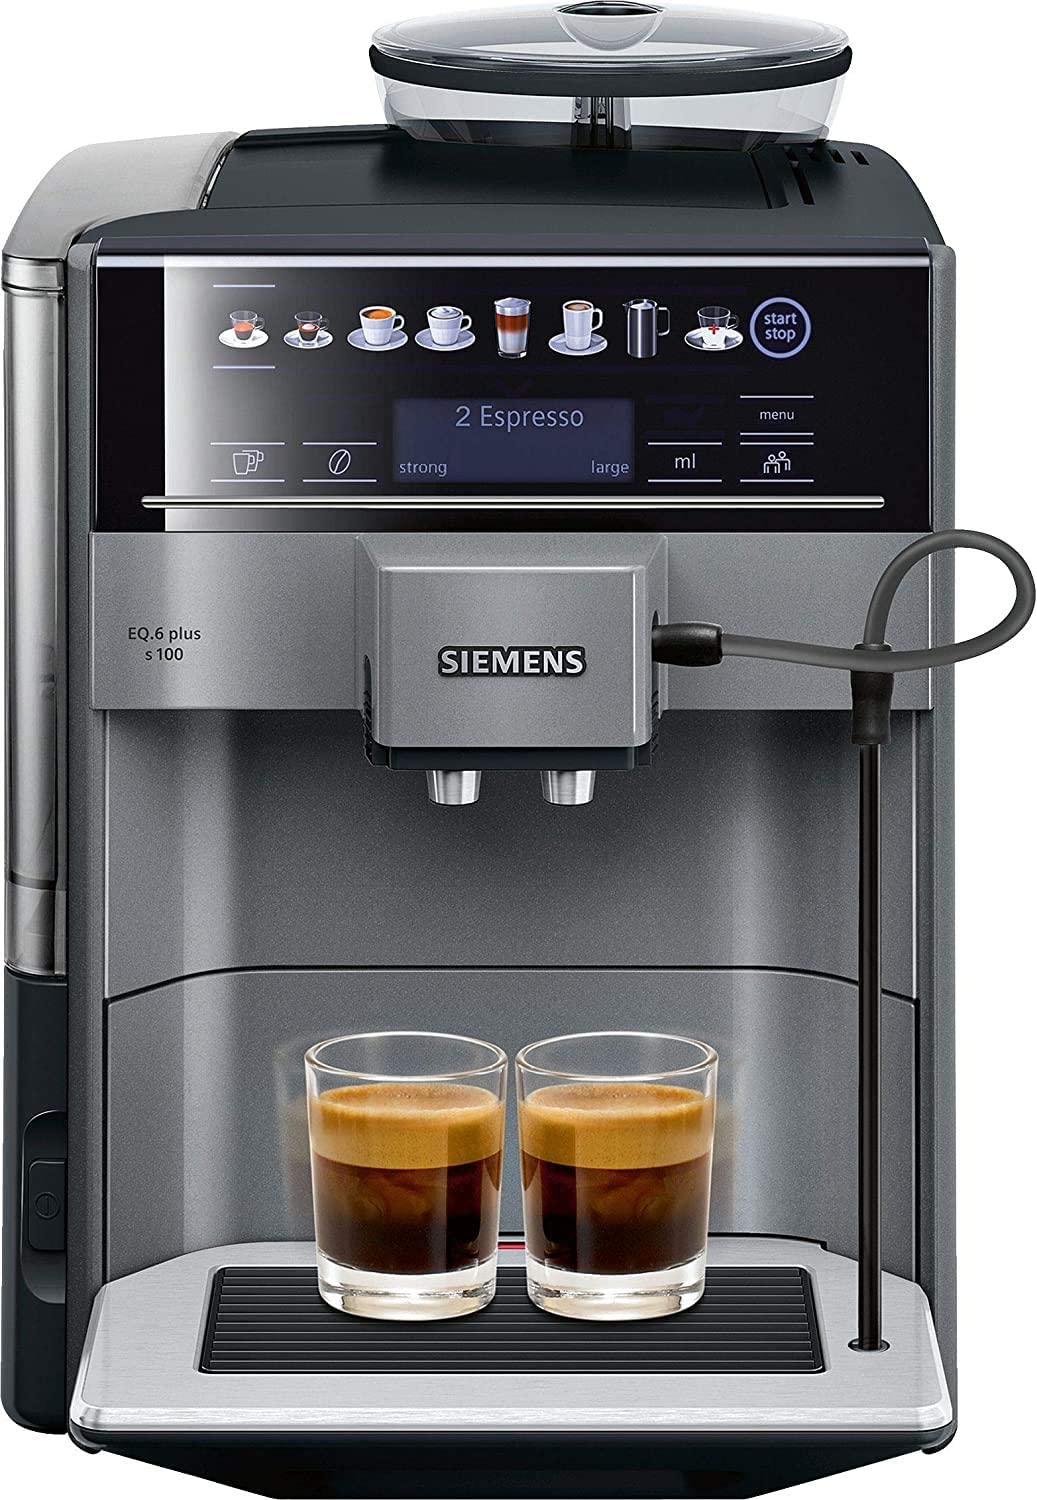 Siemens EQ.6 plus s100 TE651209RW Fully Automatic Coffee Machine, Menu Language not in German, Polycarbonate, 1.7 Litres, Black, Titanium